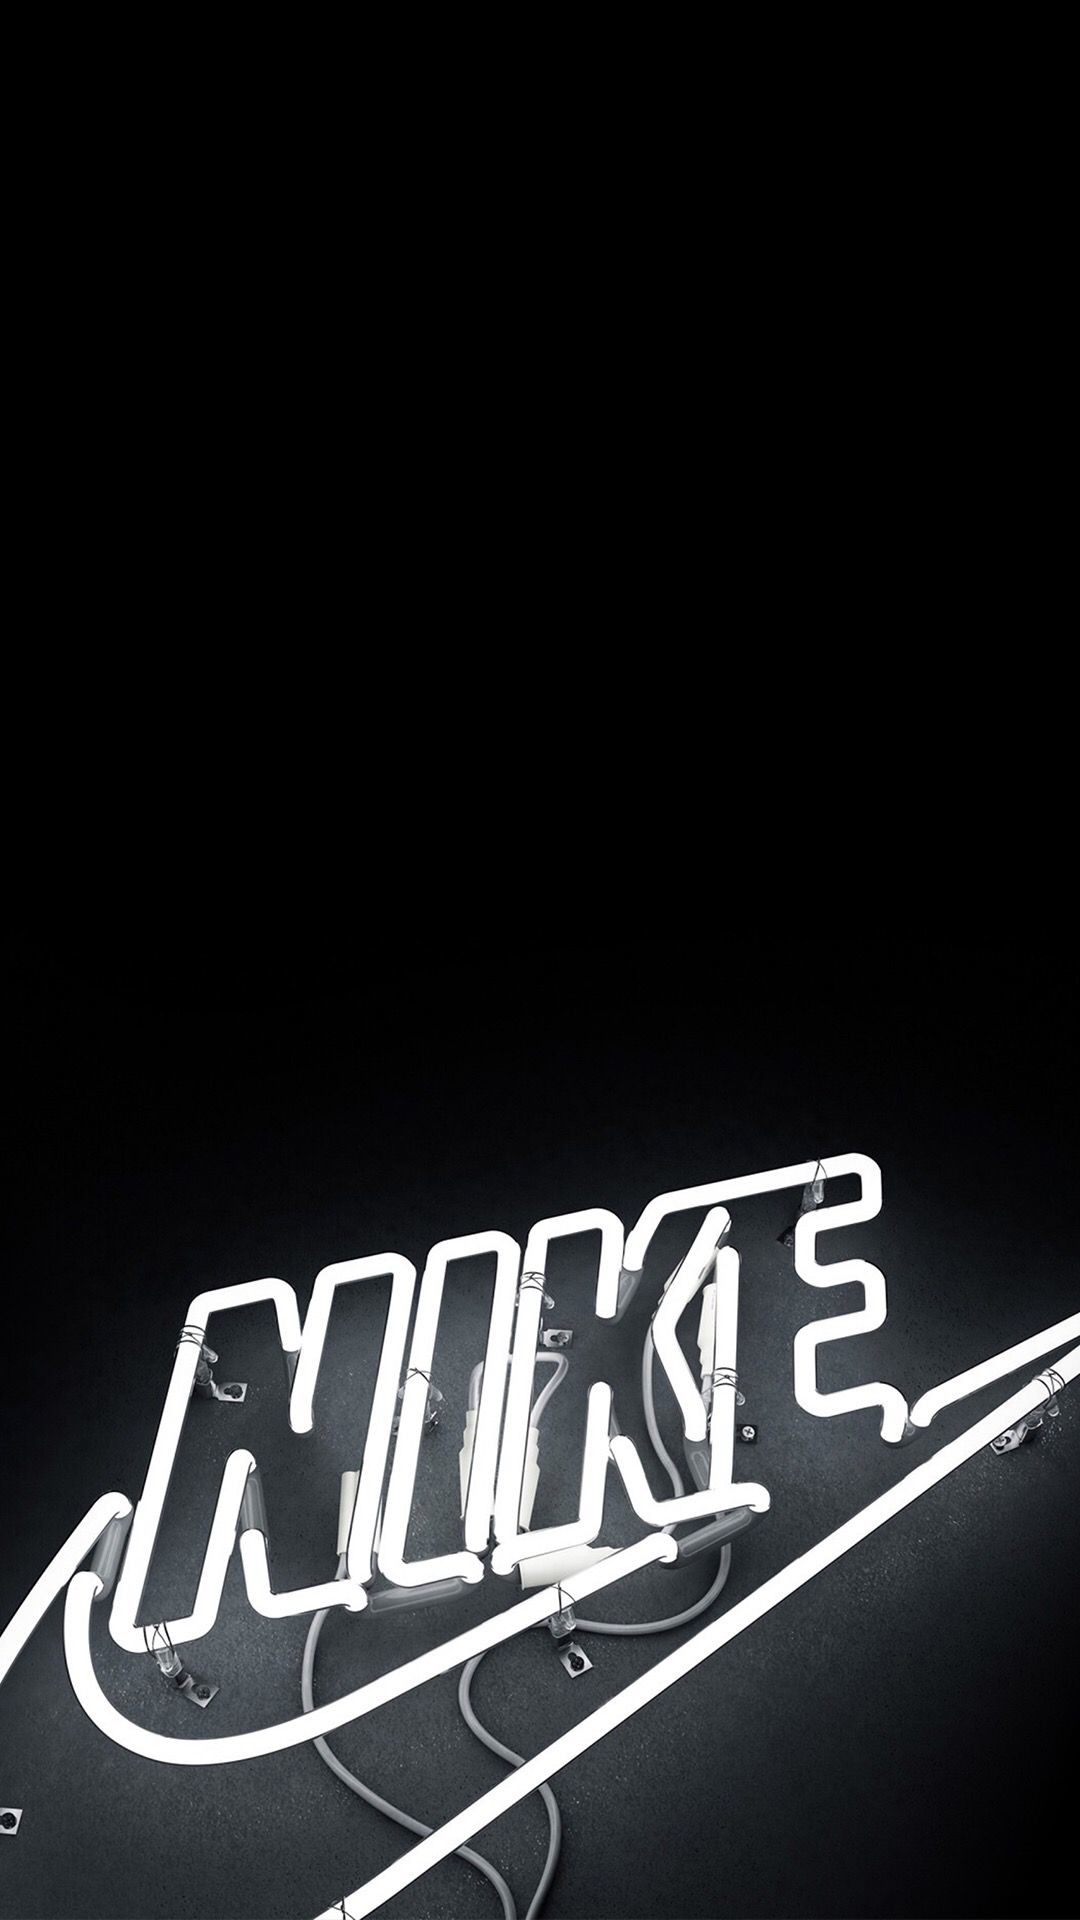 Nike ネオン Iphone Wallpapers